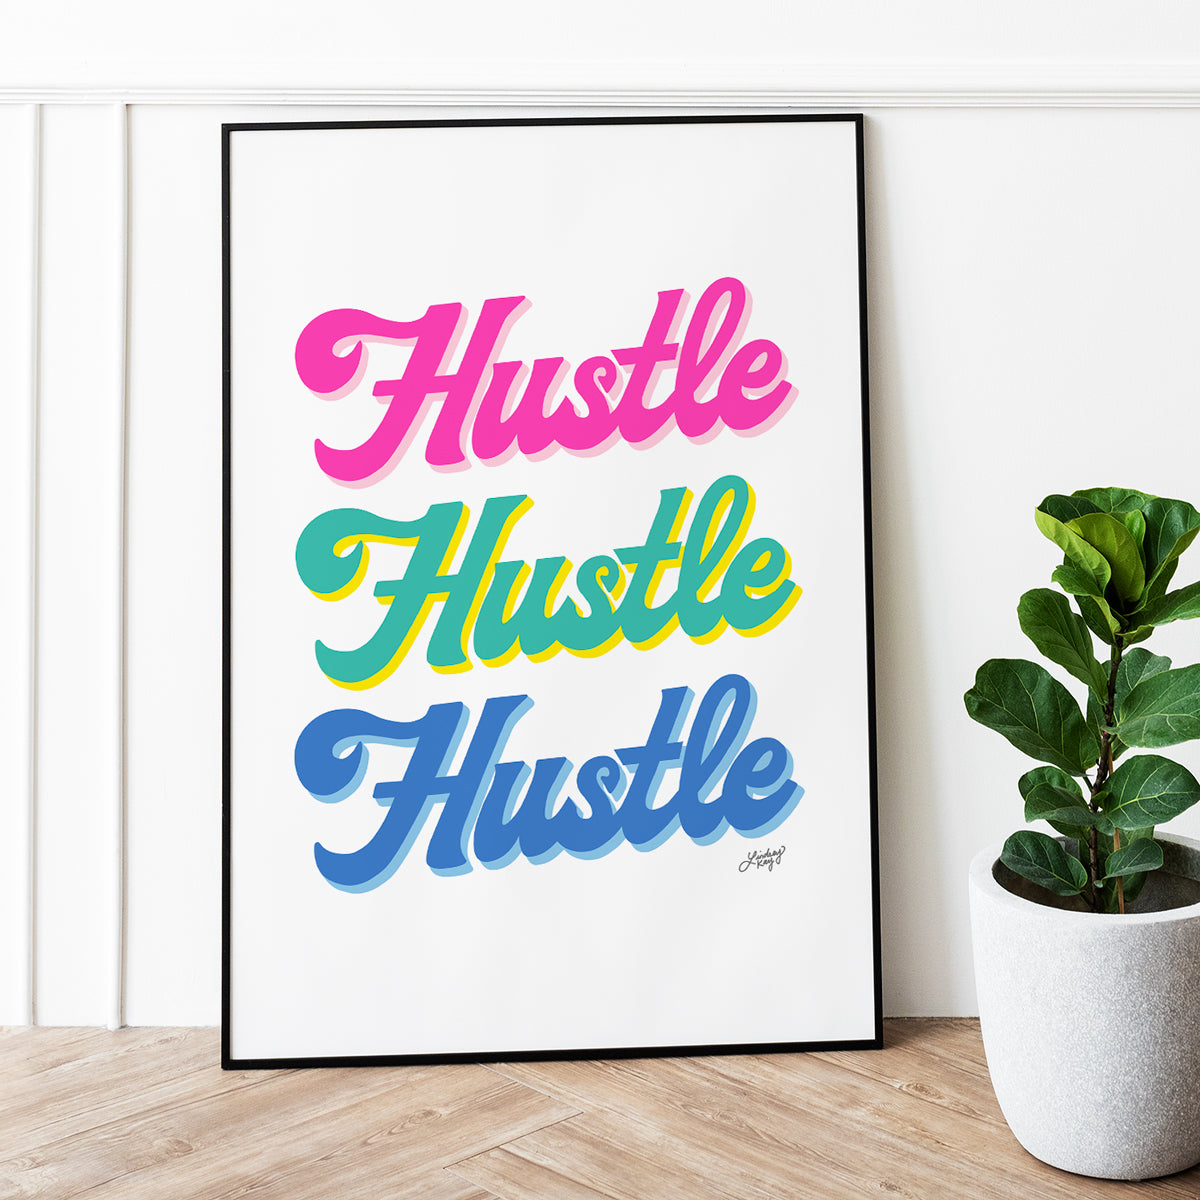 Hustle Hustle Hustle (Paleta de neón) - Impresión de arte